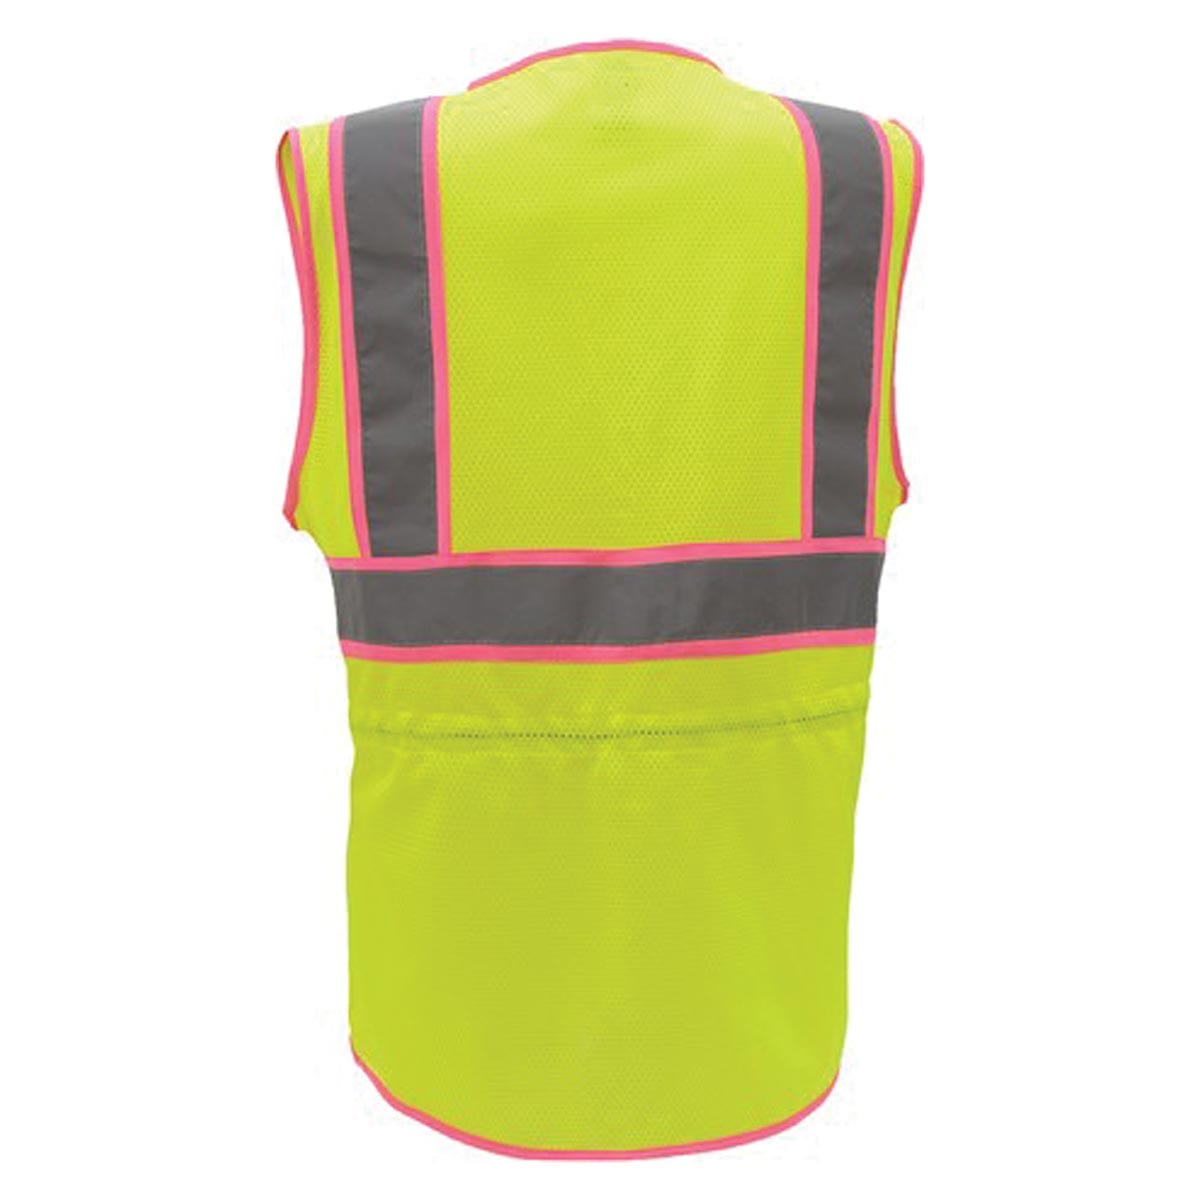 GSS Safety Women's ANSI Class 2 Two-Tone Hi-Vis Zip Vest